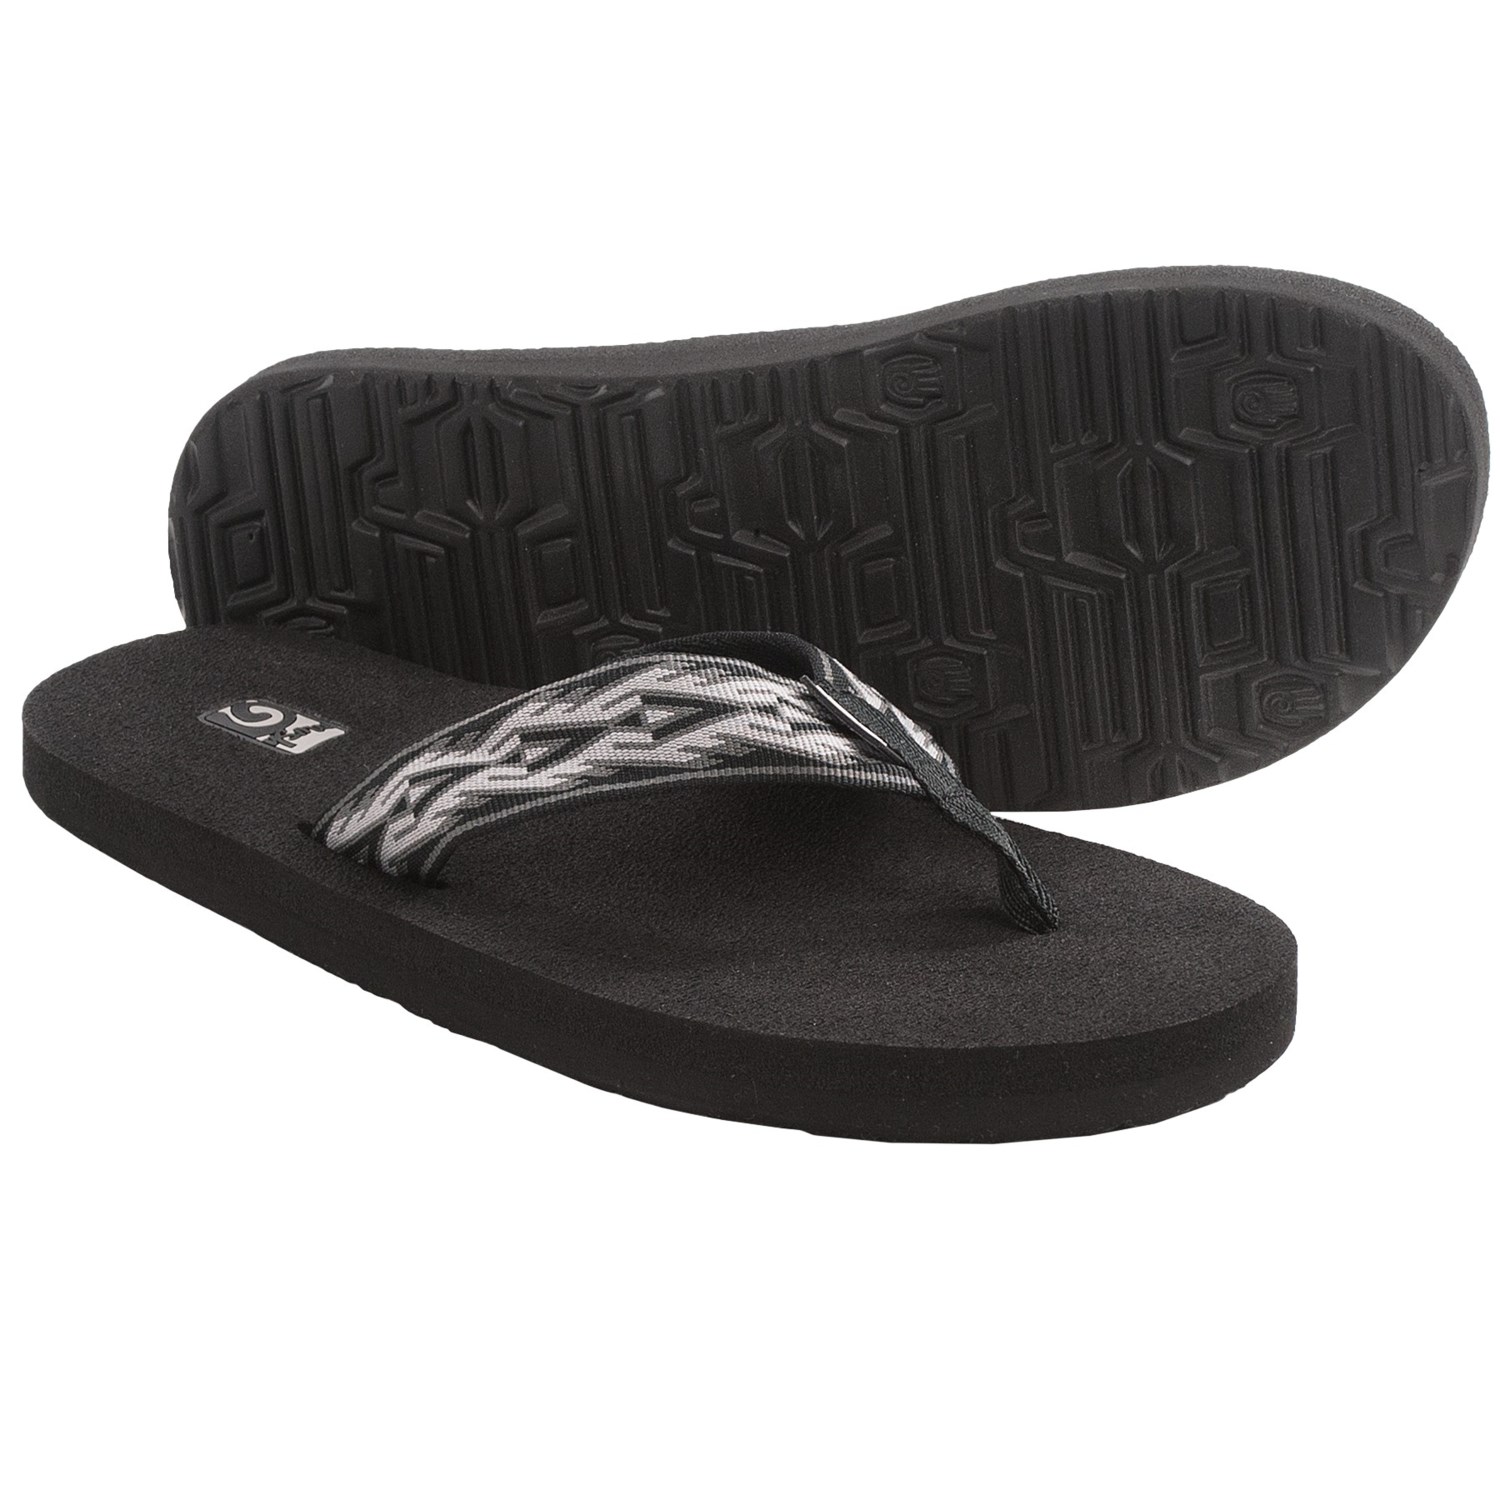 Teva Mush II Thong Sandals - Flip-Flops (For Men) in Kolina Black